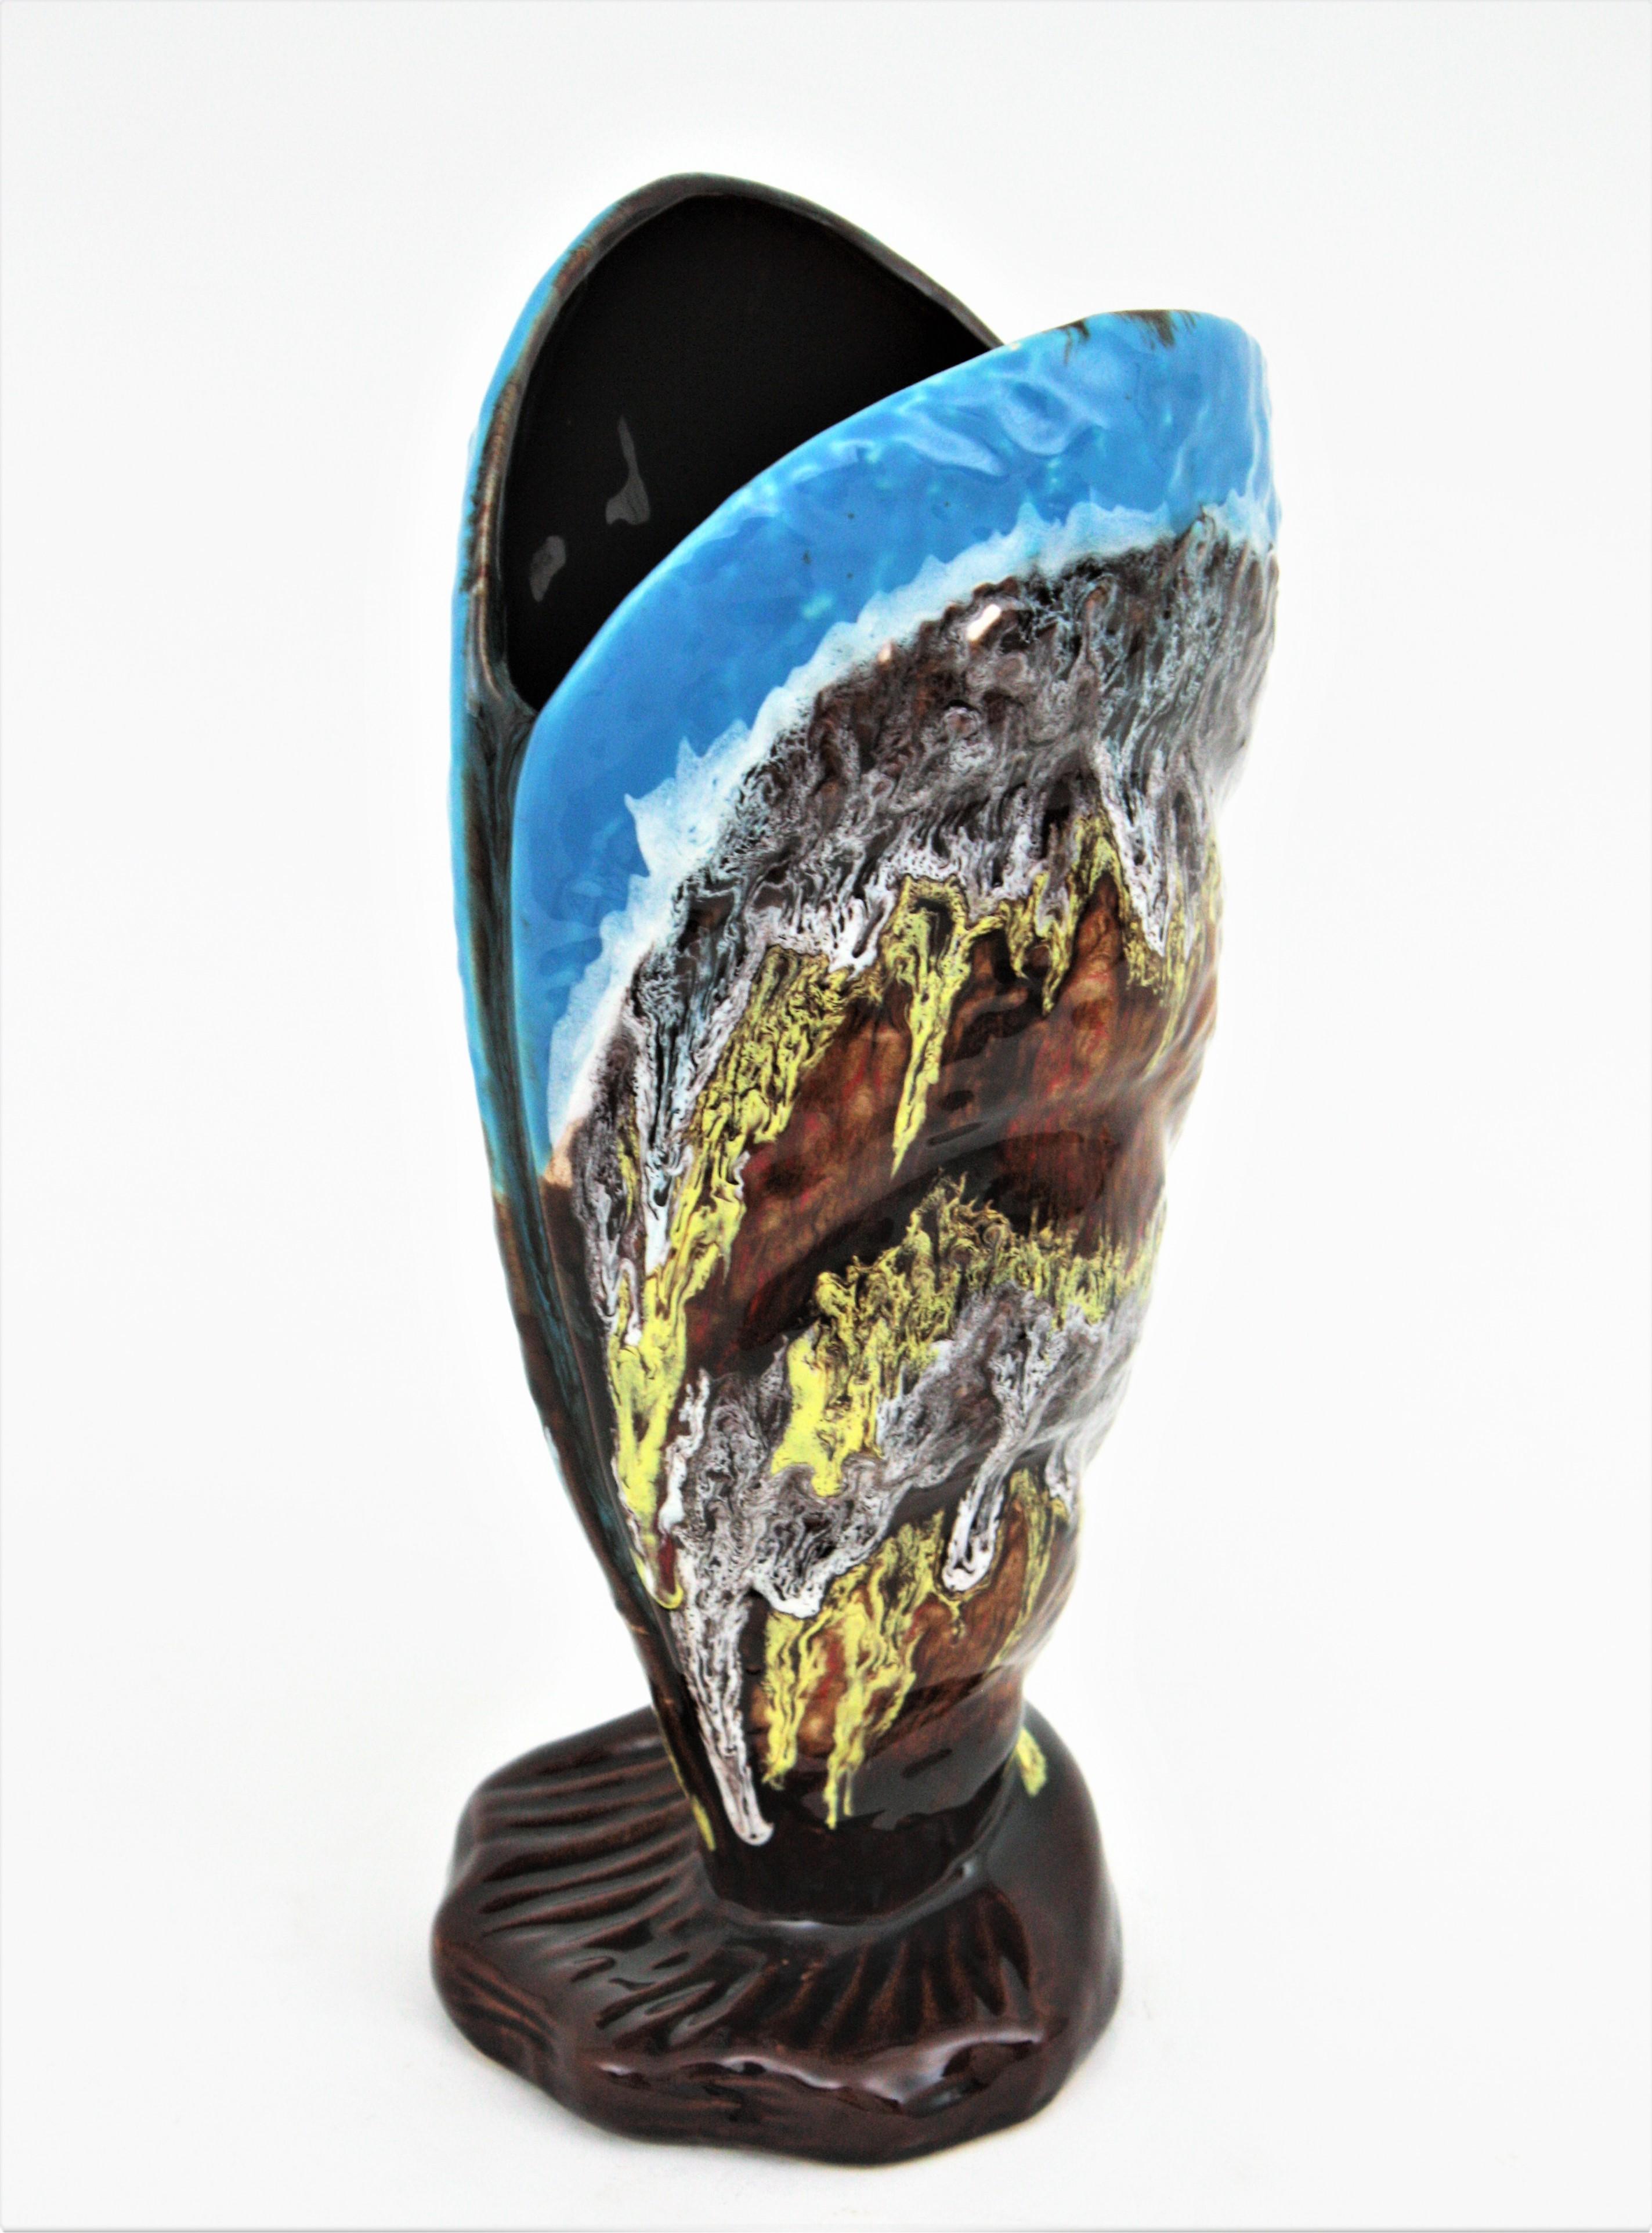 French Vallauris Majolica Shell Shaped Vase in Multi Color Glazed Ceramic For Sale 1